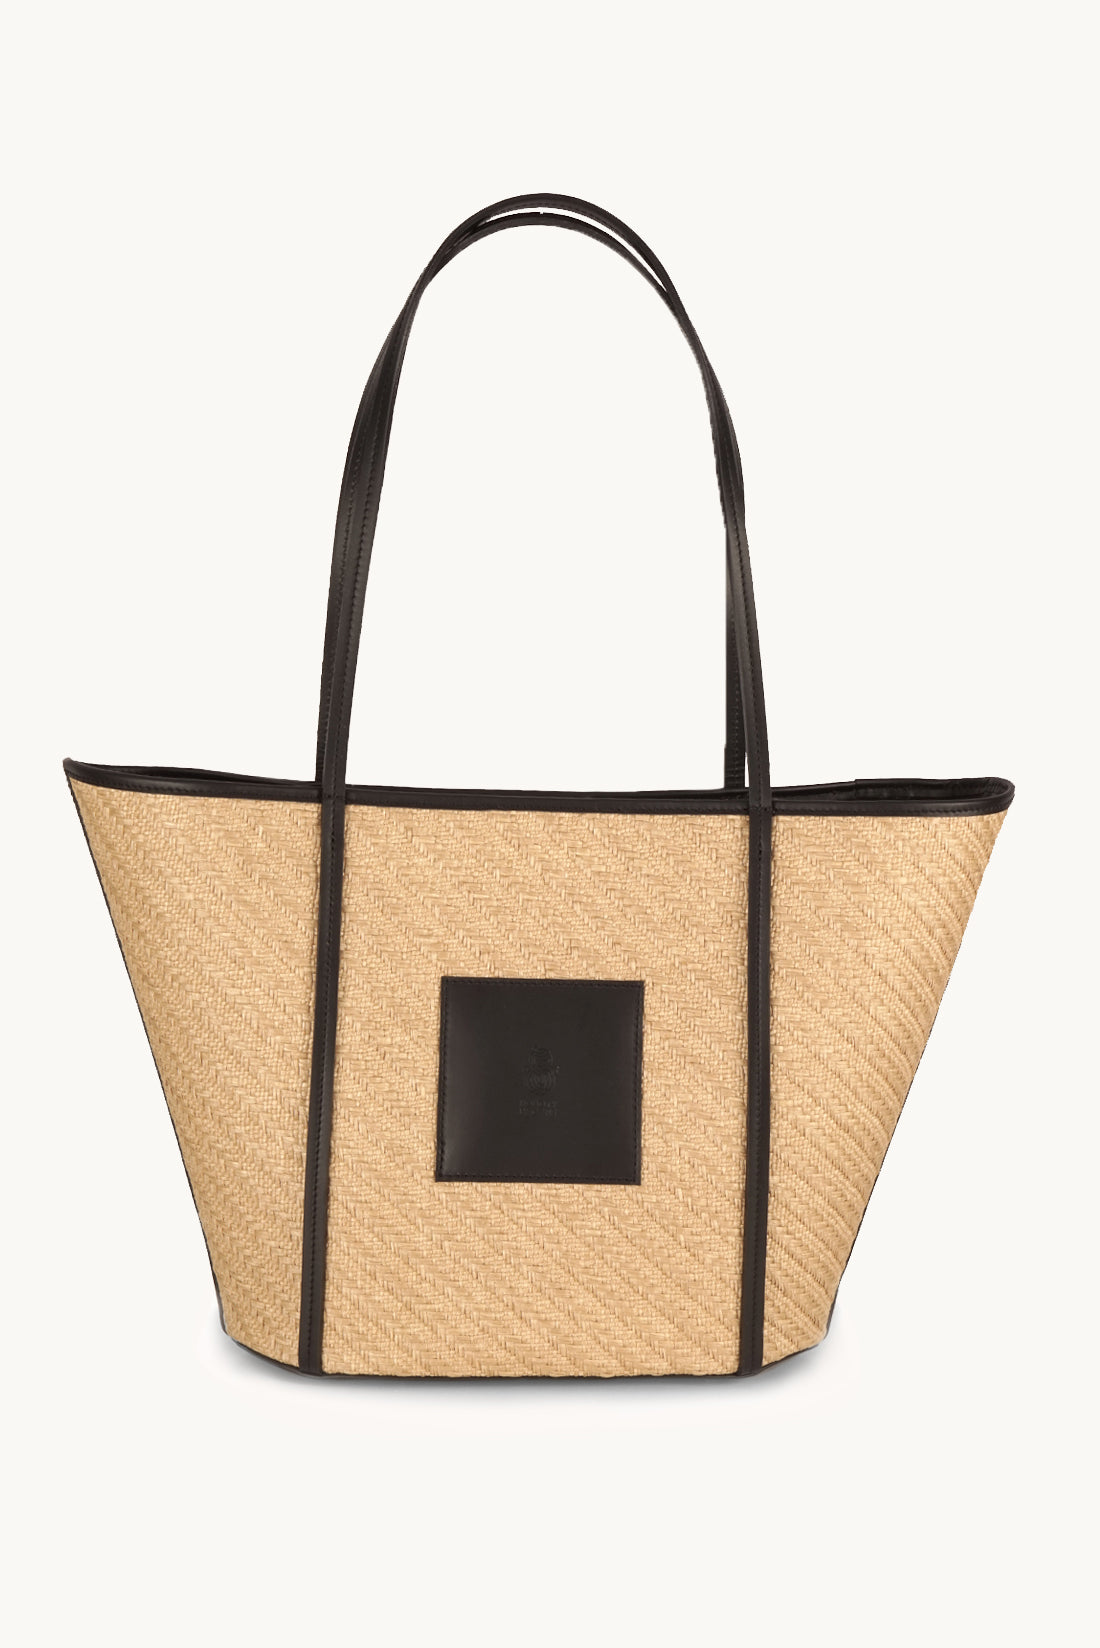 Francois Leather Basket - Limited Edition